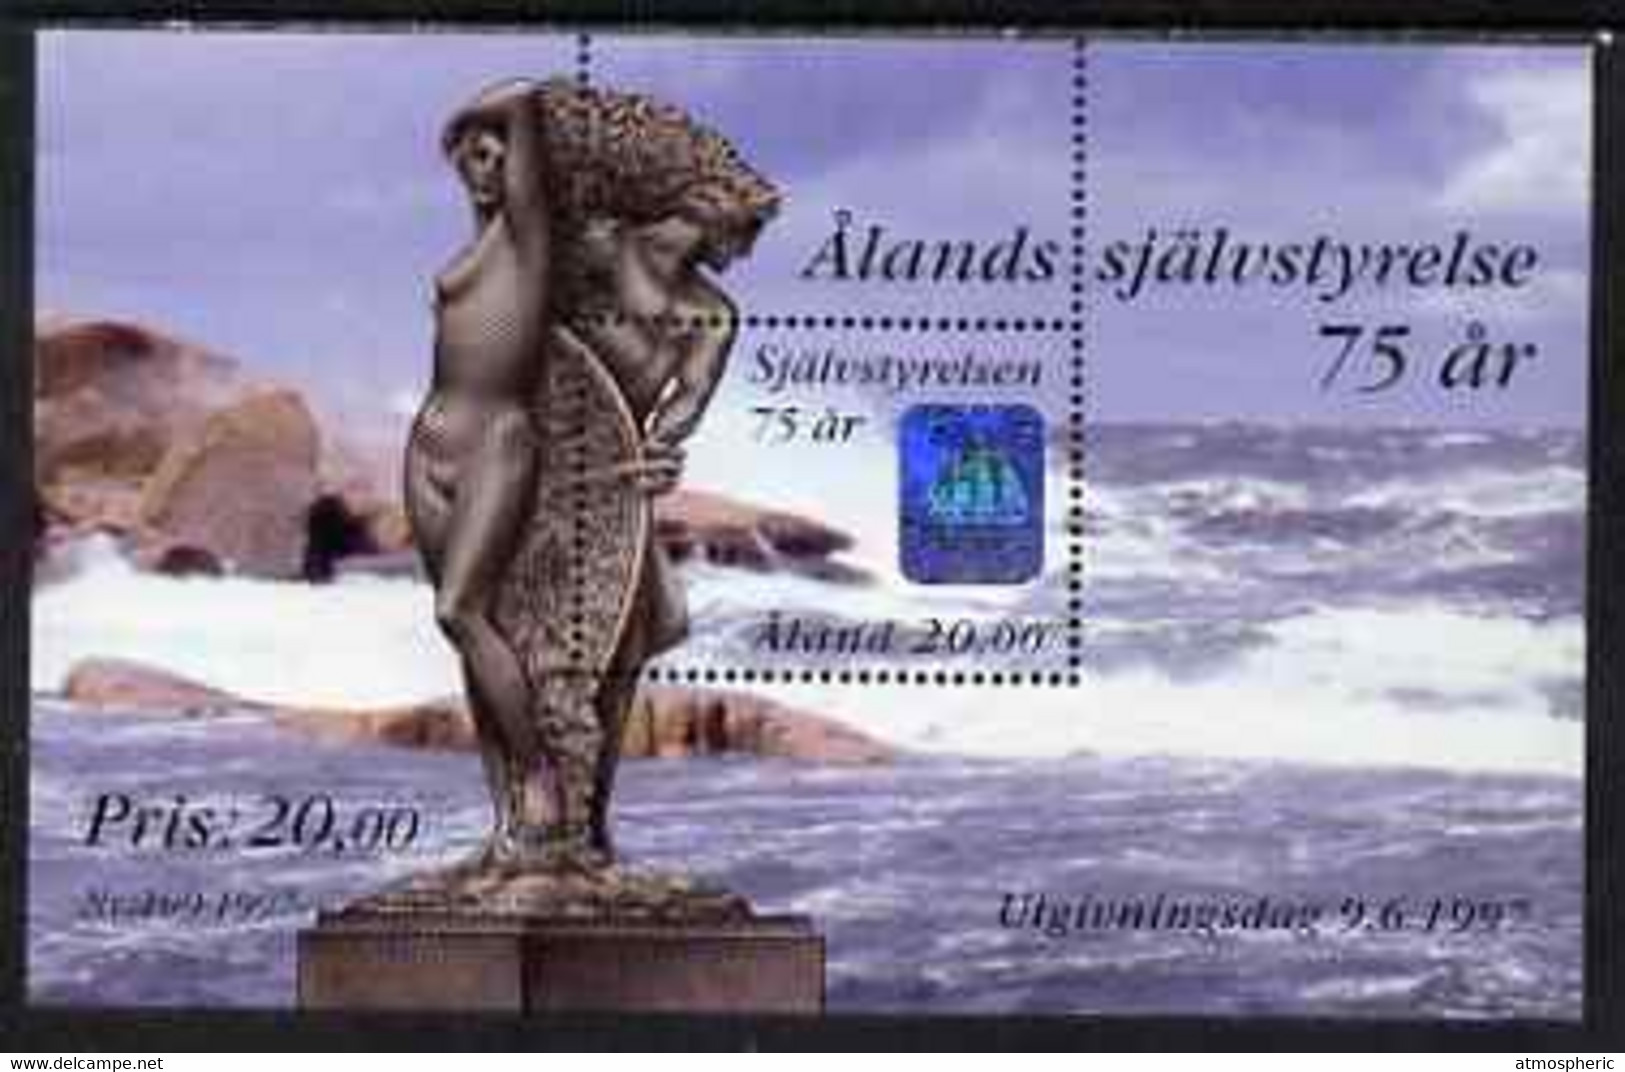 Aland Islands 1997 75th Anniversary Of Autonomy Perf M/sheet U/M SG MS 126 - Ortsausgaben